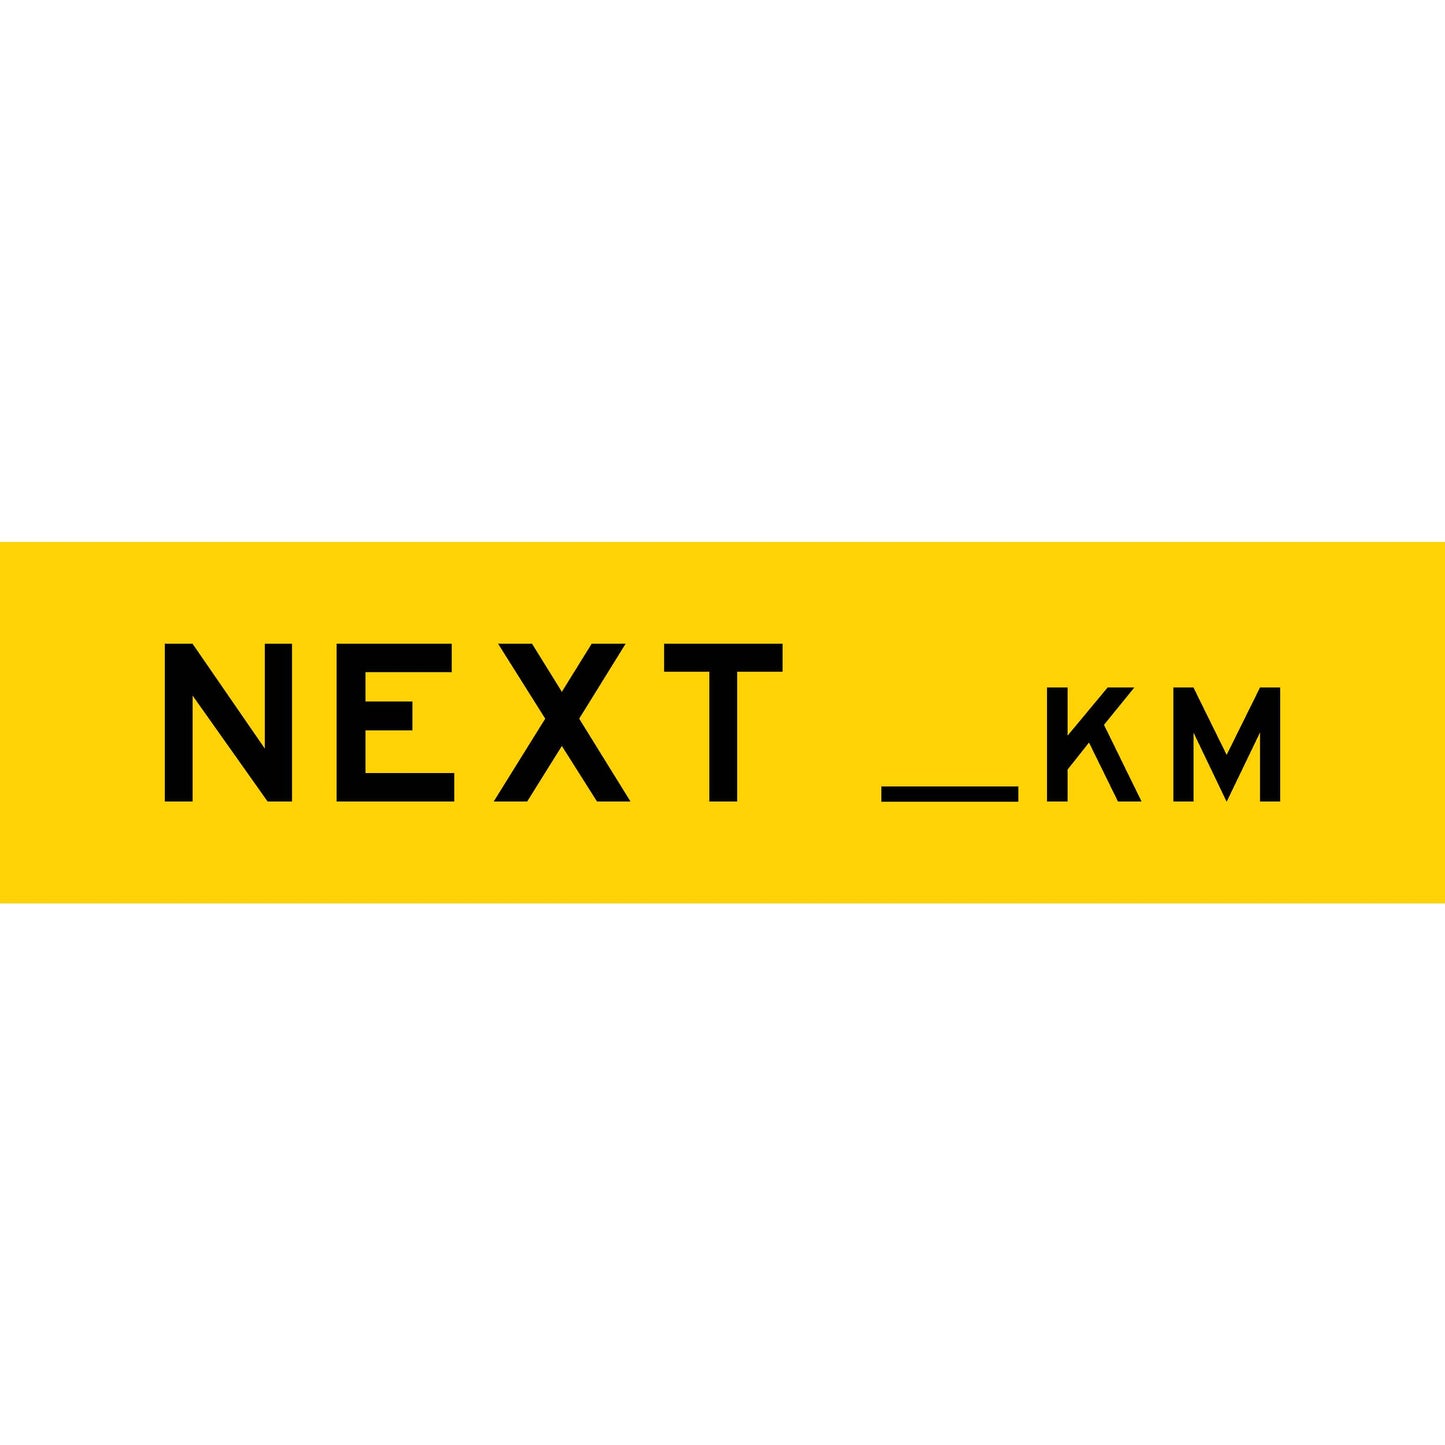 Next __km Long Skinny Multi Message Reflective Traffic Sign